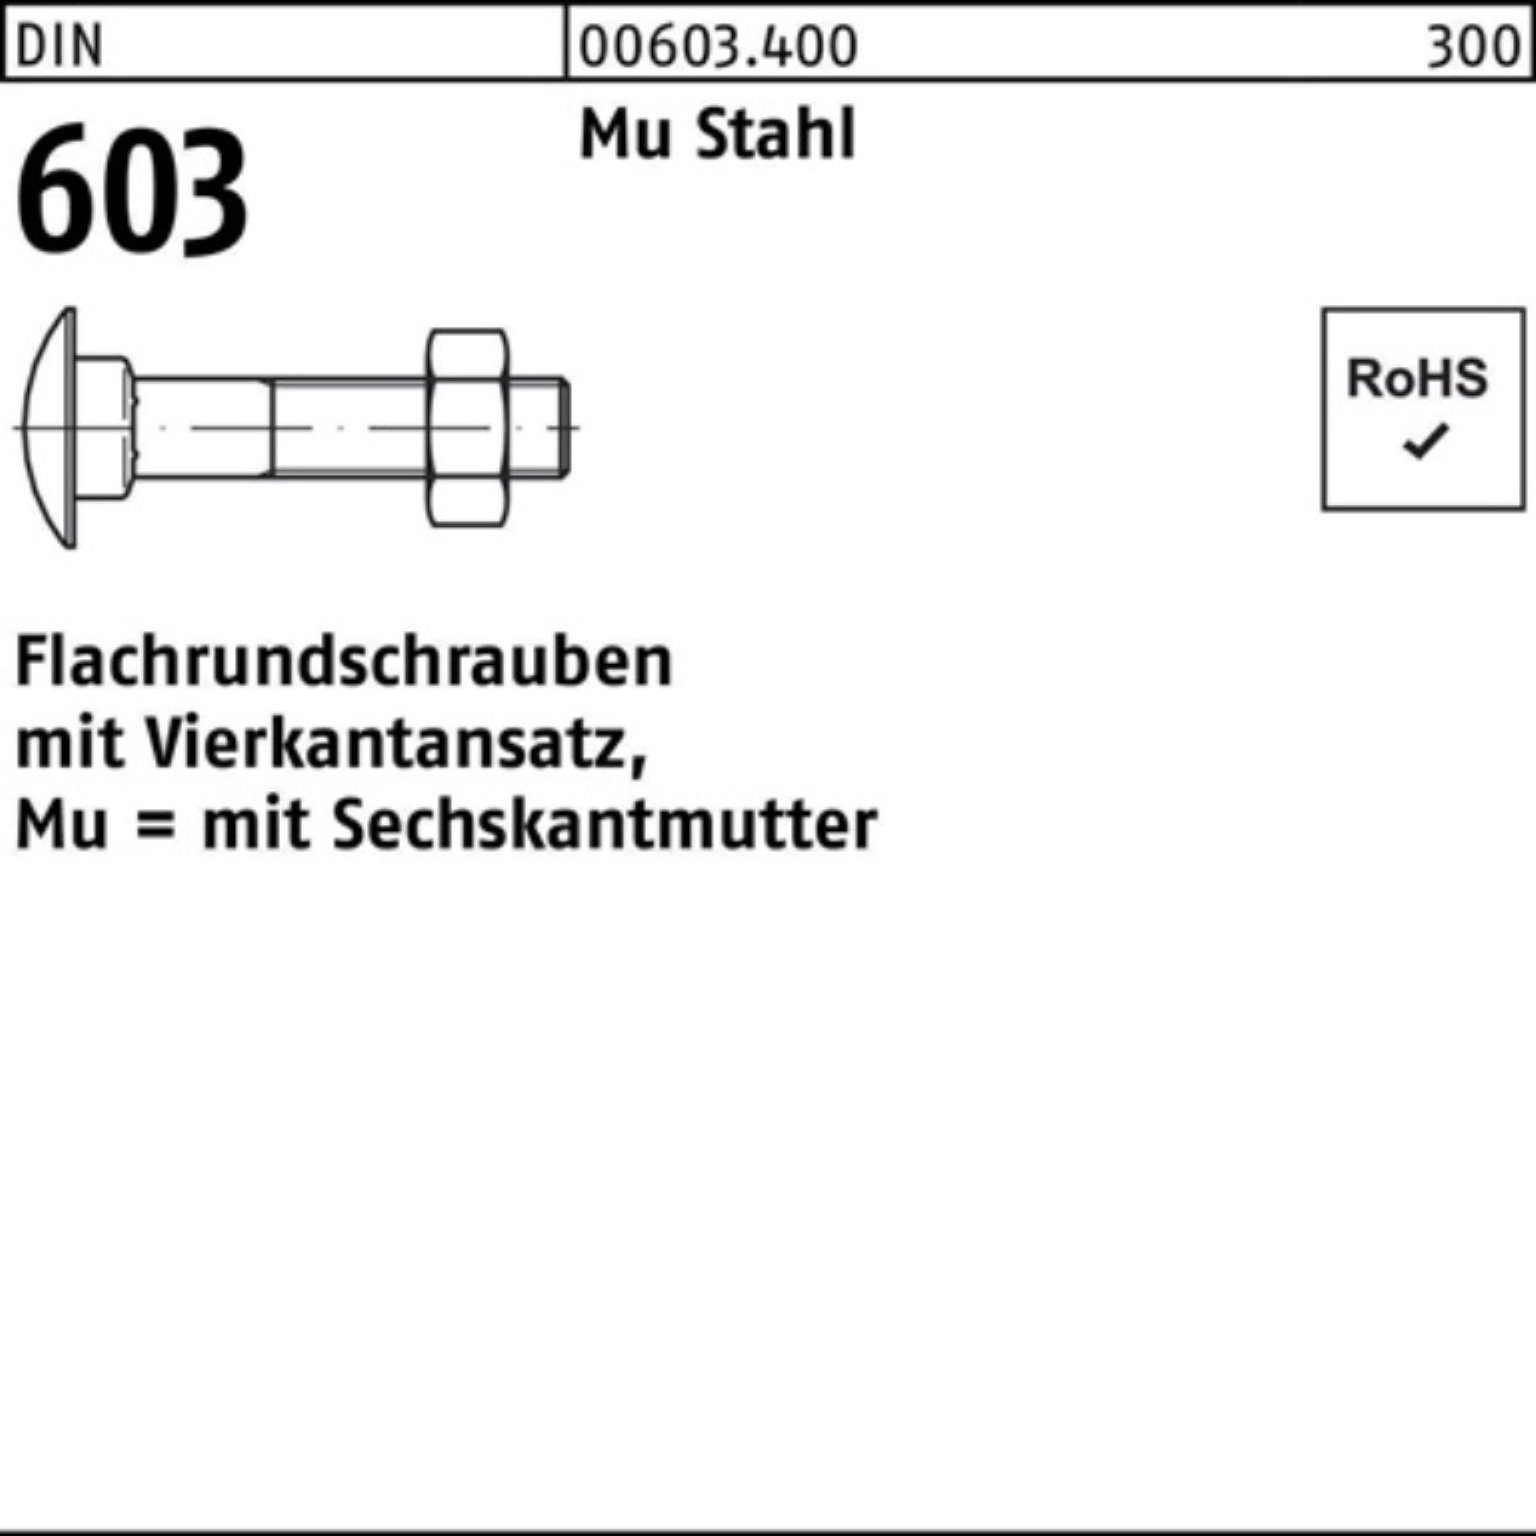 DIN Flachrundschraube 200er Pack 603 M8x25 M Vierkantansatz/6-ktmutter Schraube Reyher